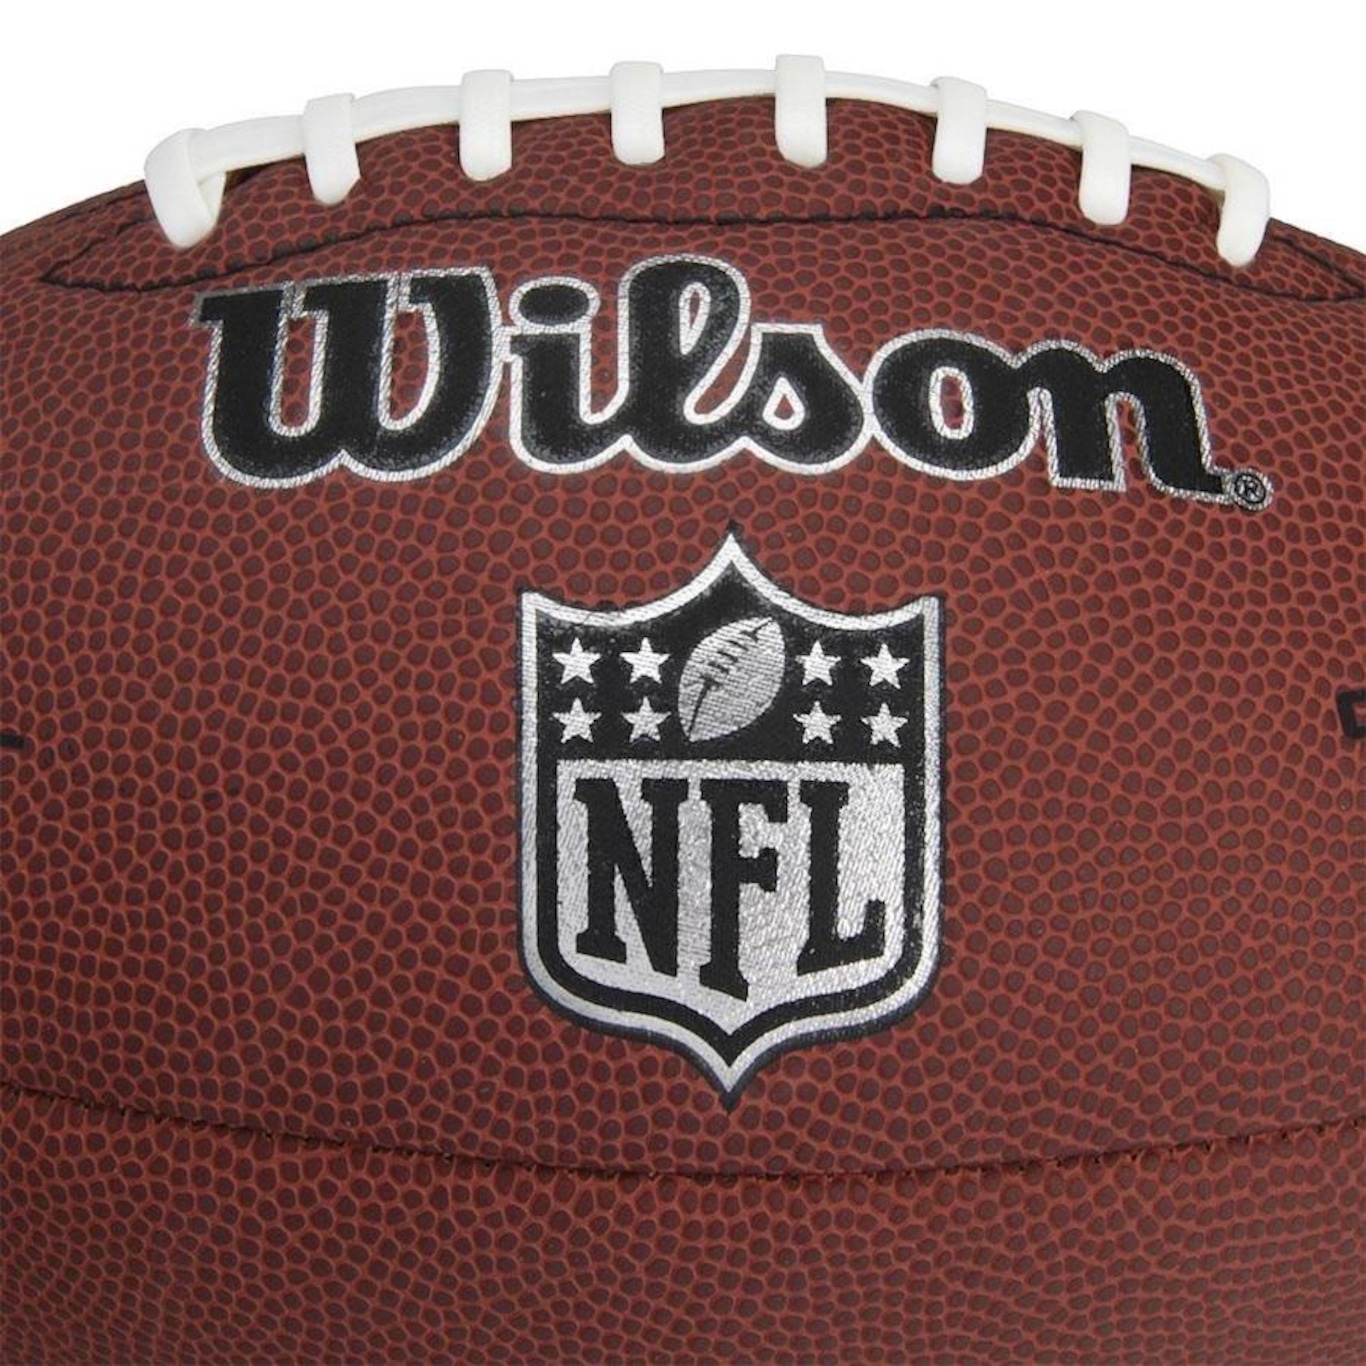 Bola de Futebol Americano WILSON NFL LIMITED